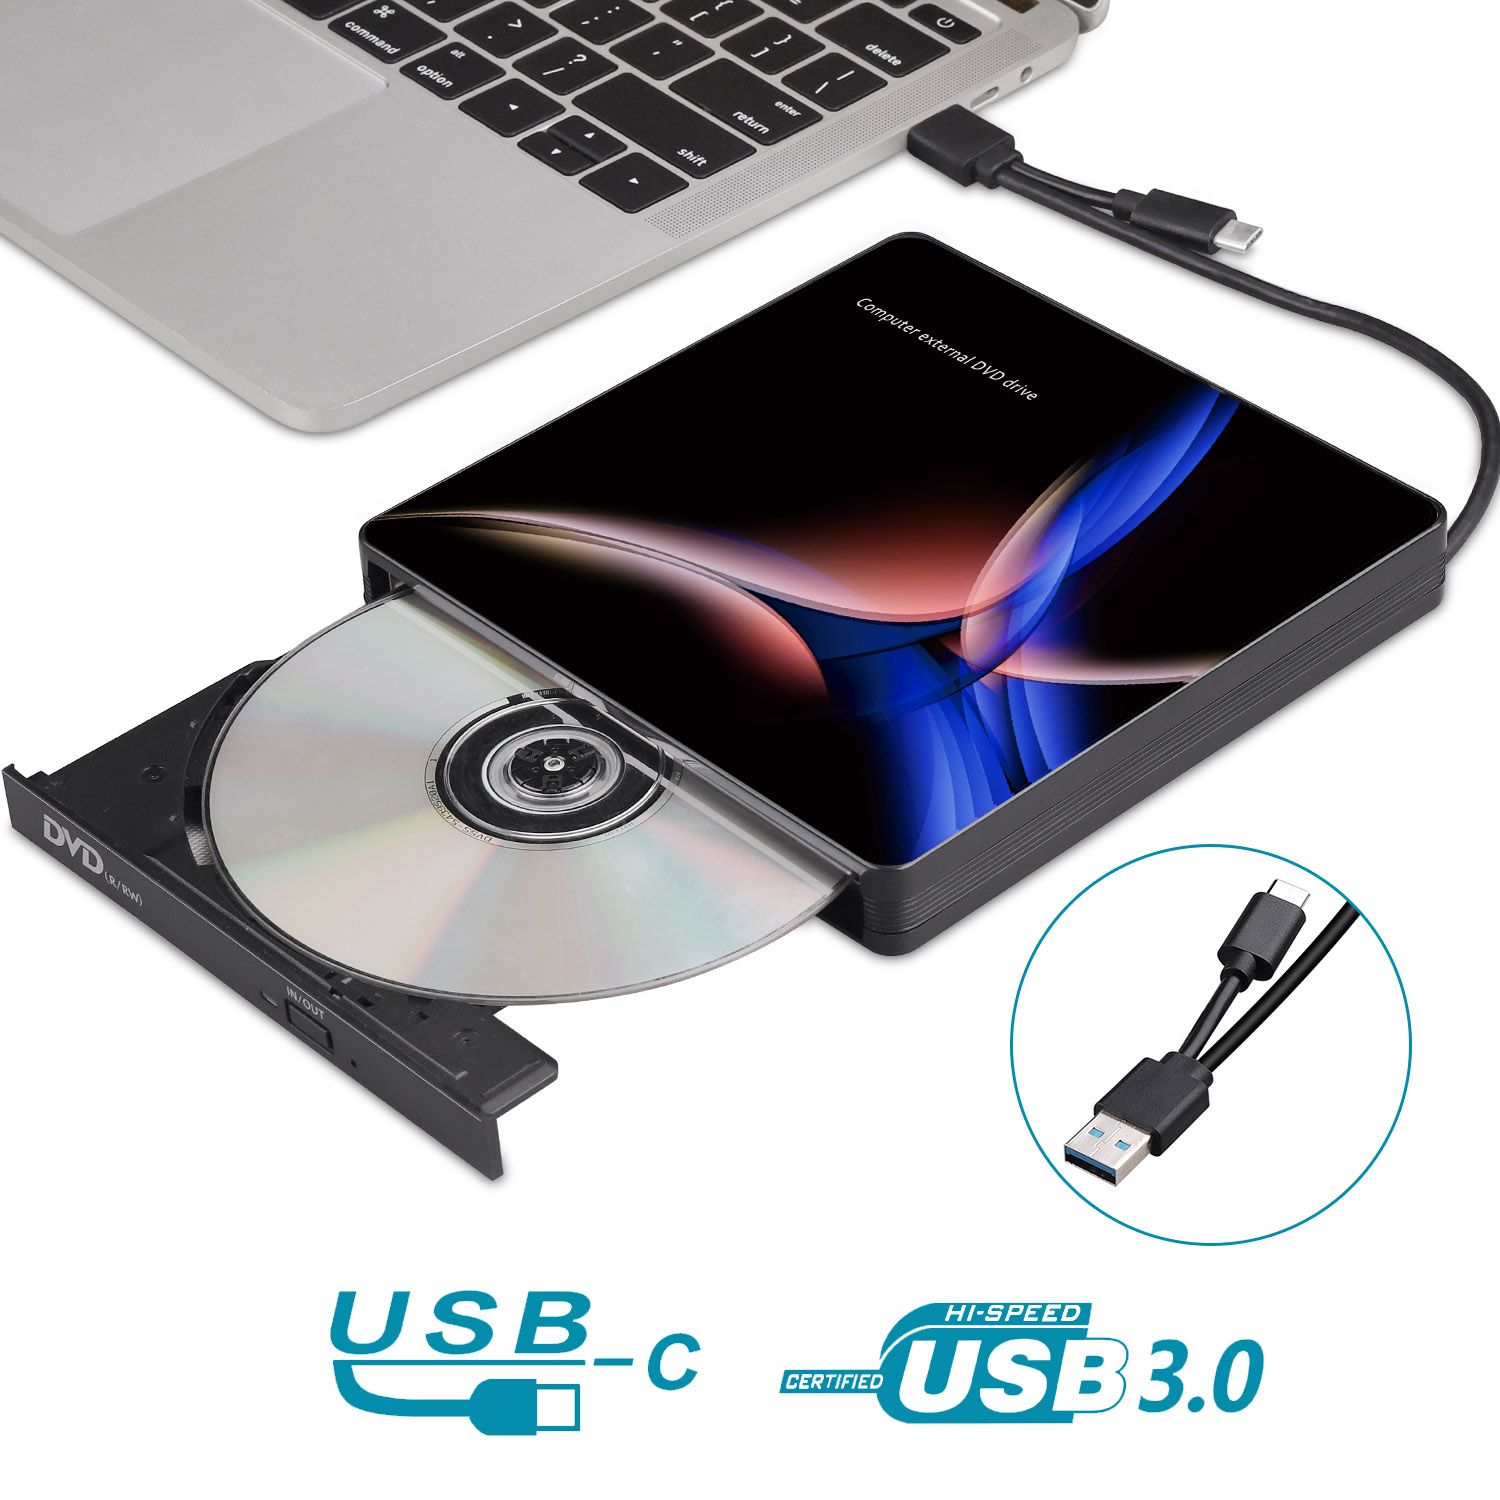 USB-C-External-Optical-Drive-USB-30-Type-C-CDDVD-Player-CD-Burner-for-PC-Laptop-Windows-1644297